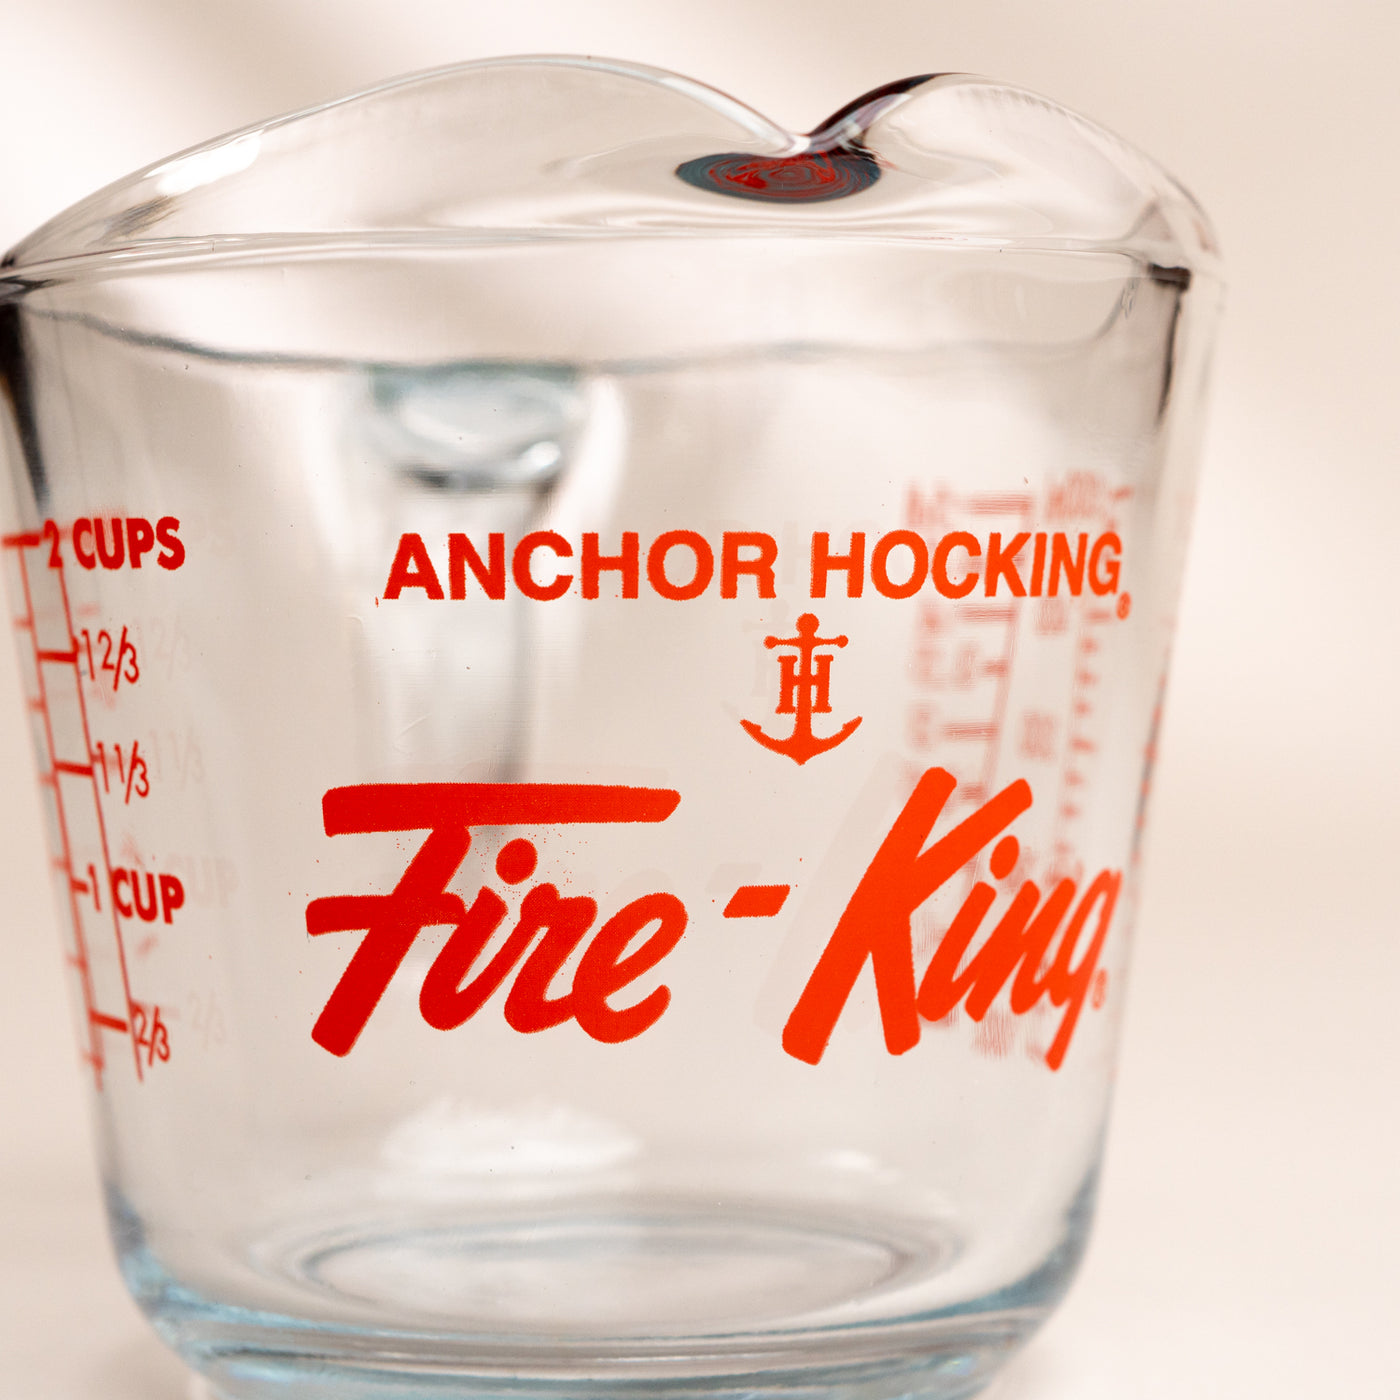 Anchor Glass, Shot, Measuring